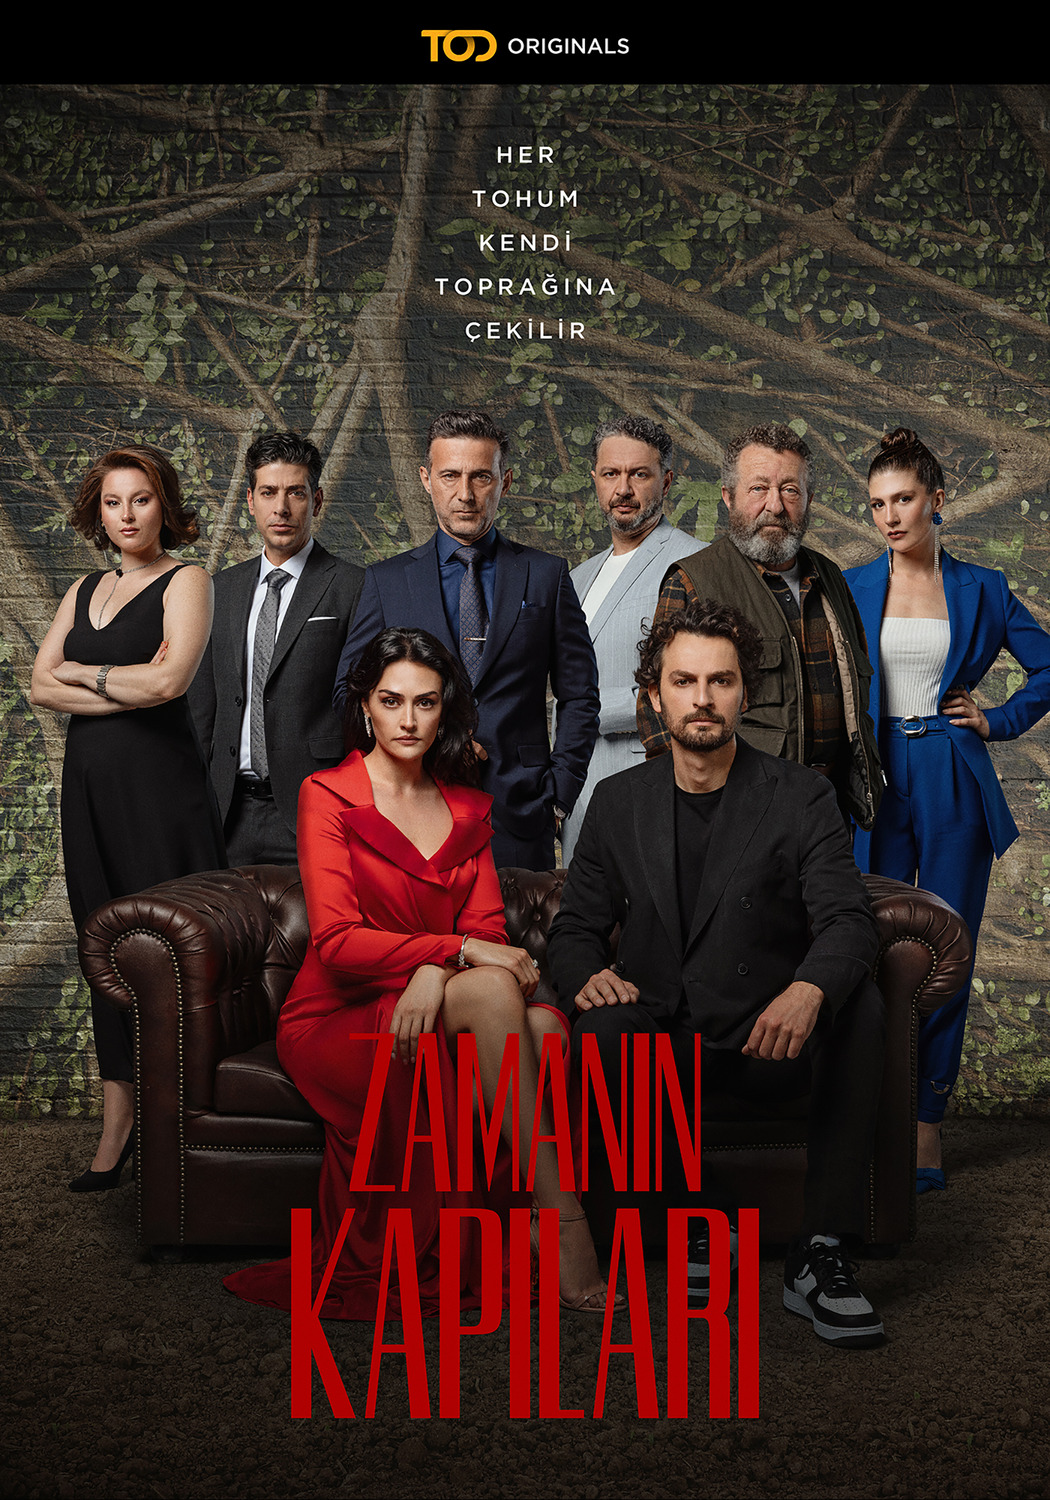 Extra Large TV Poster Image for Zamanin Kapilari (#2 of 4)